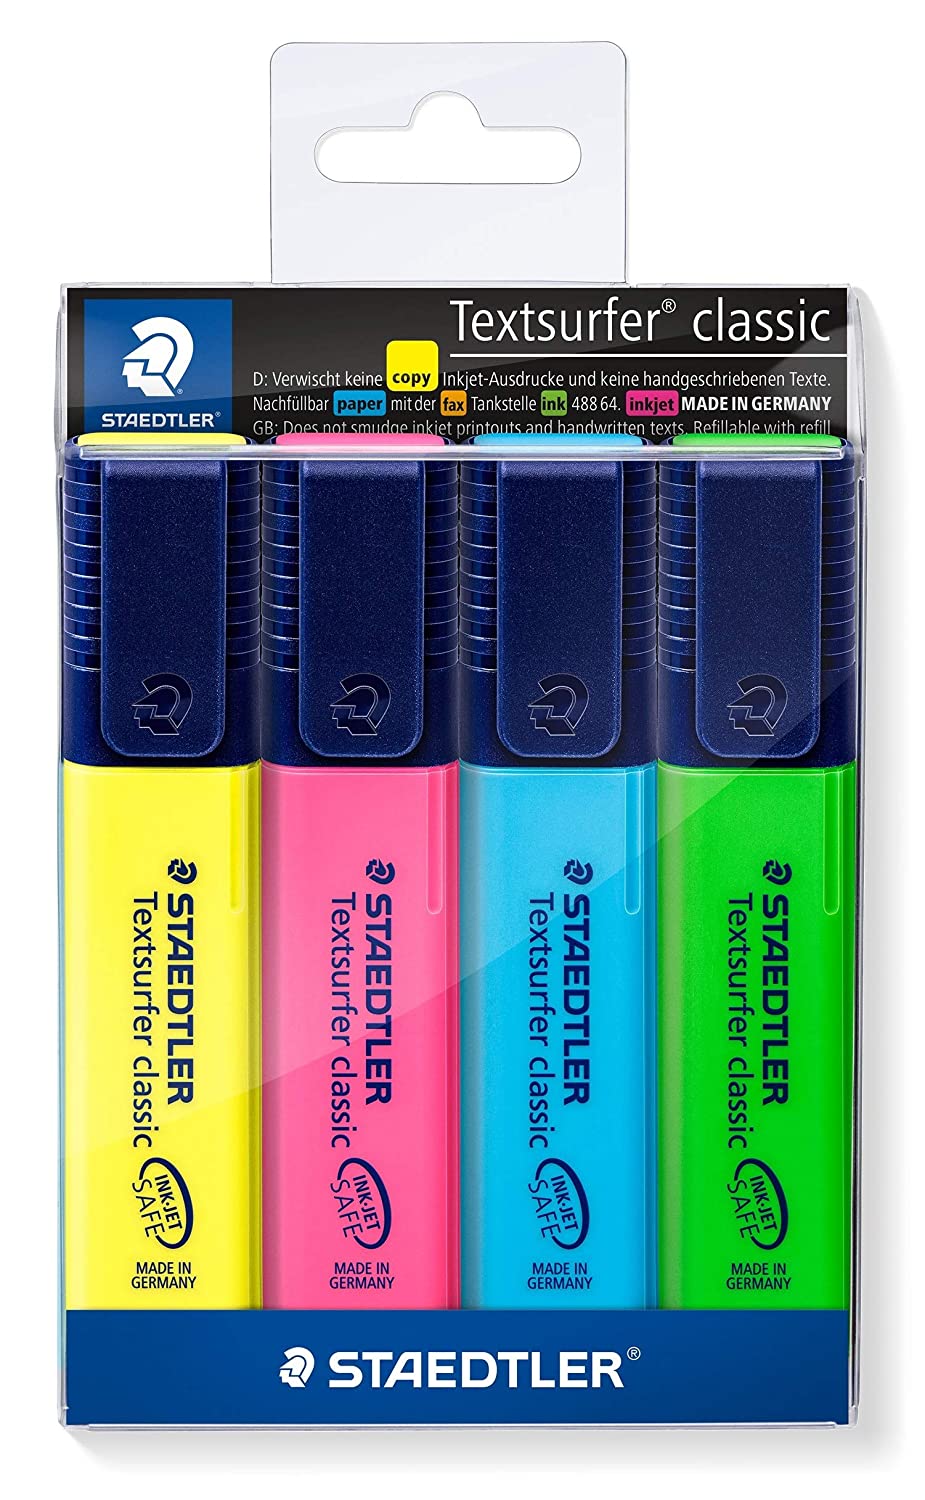 Detec™ Staedtler Textsurfer Classic 364 WP4 Highlighter Pen - Multicolor Body, Multicolor Ink, Pack Of 4